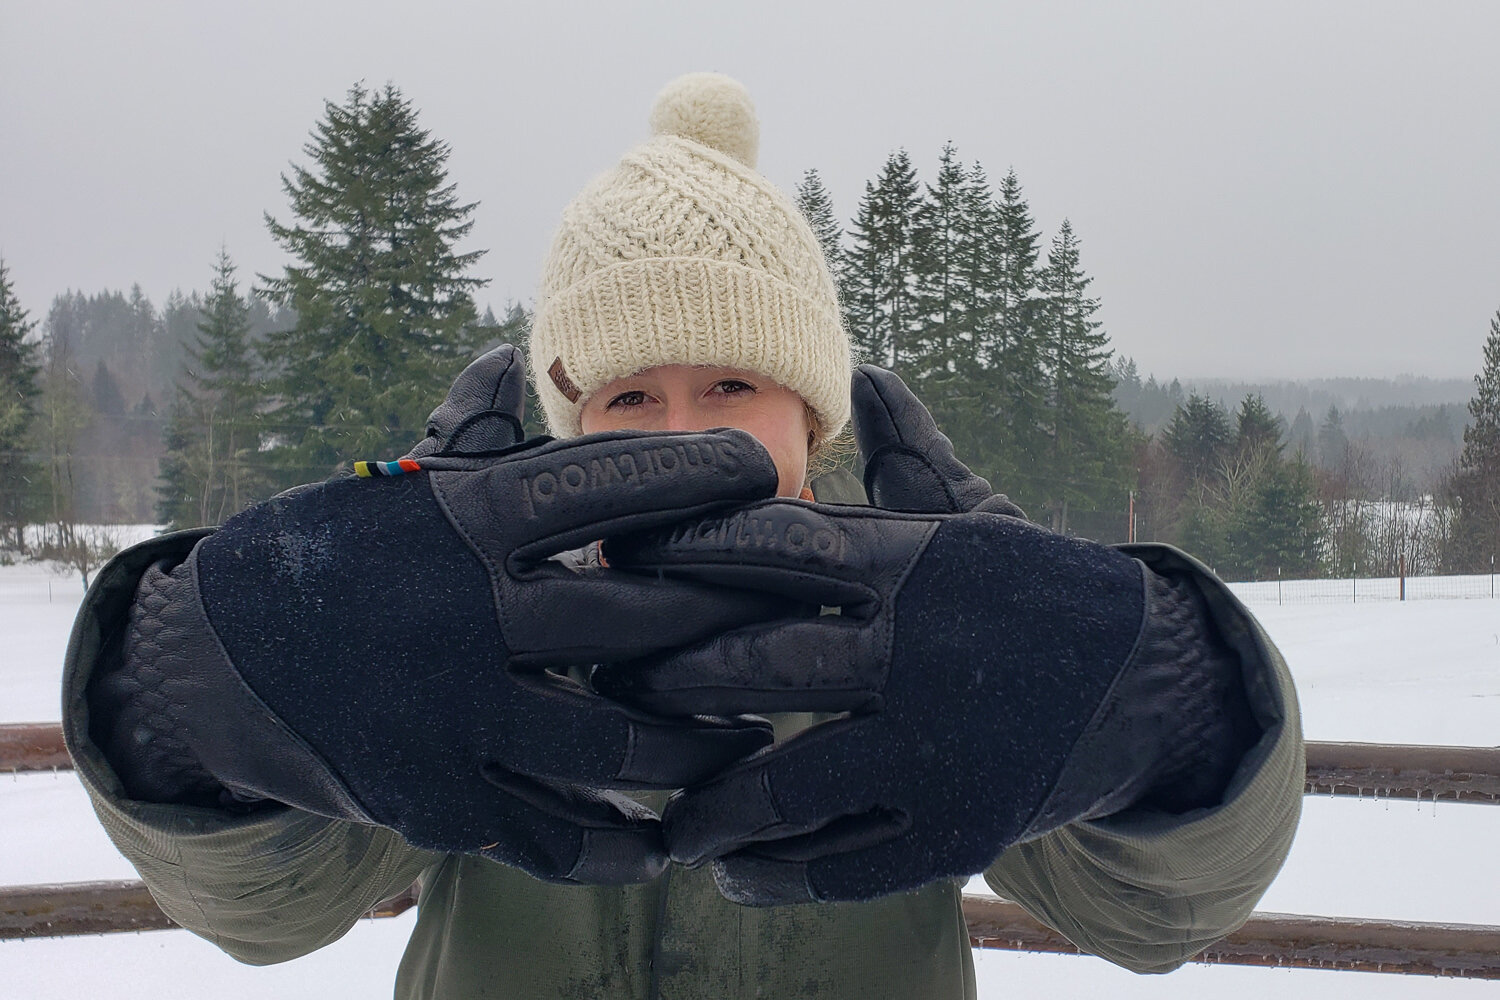 The Smartwool Ridgeway gloves are tough, stylish & versatile.